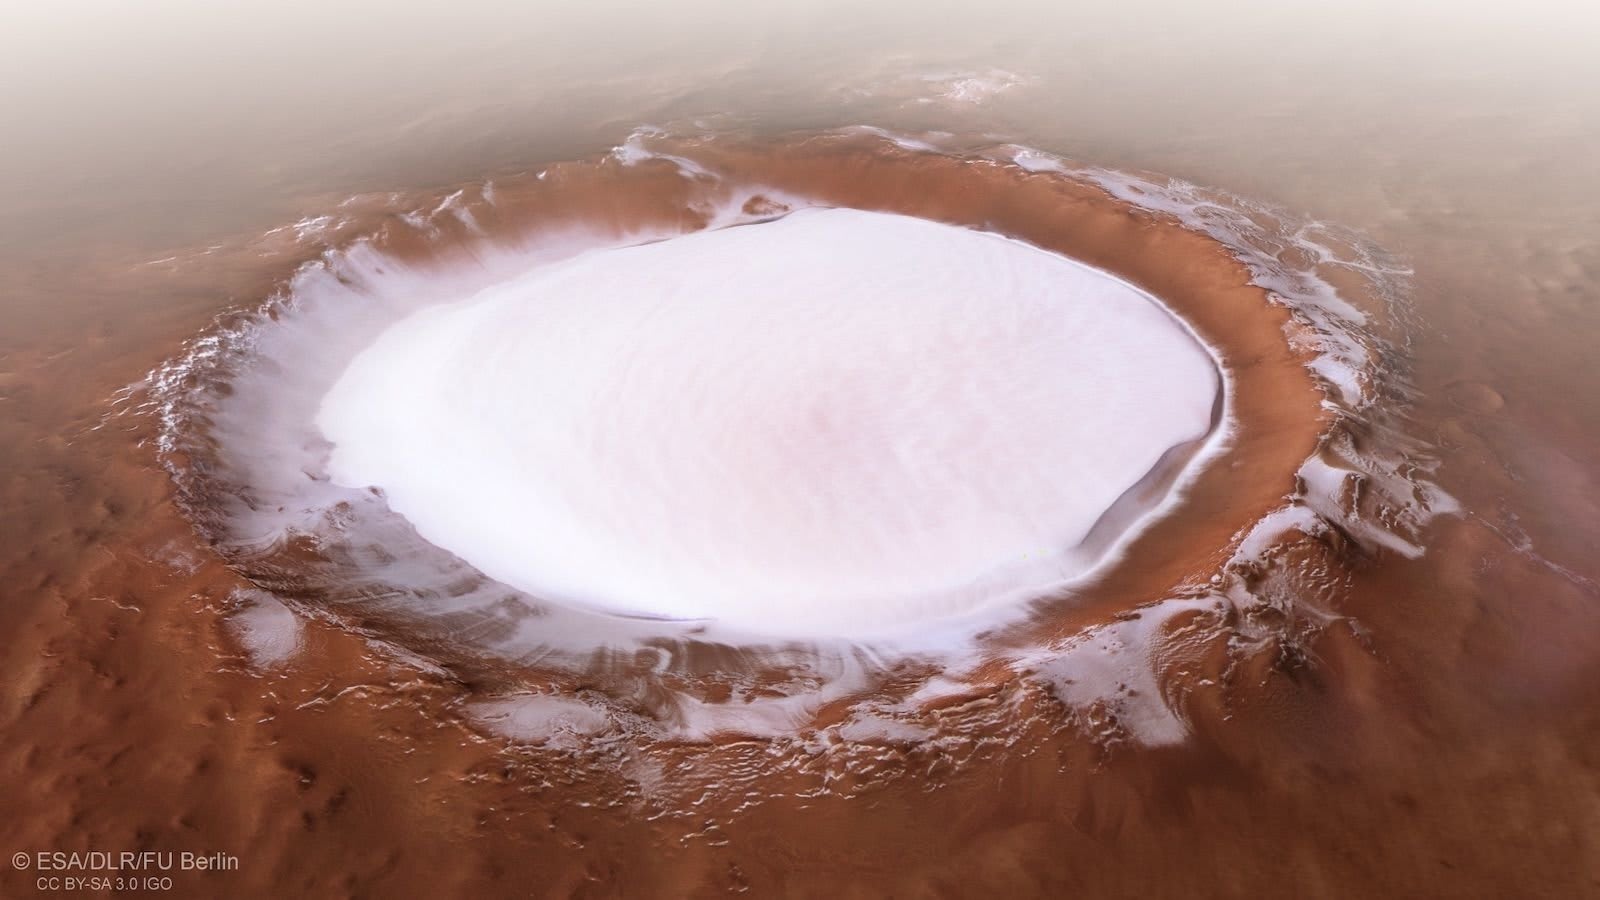 Nasa 火星 埋蔵氷 の予測地図を公開 飲料 燃料資源として着陸地選定に活用 Engadget 日本版